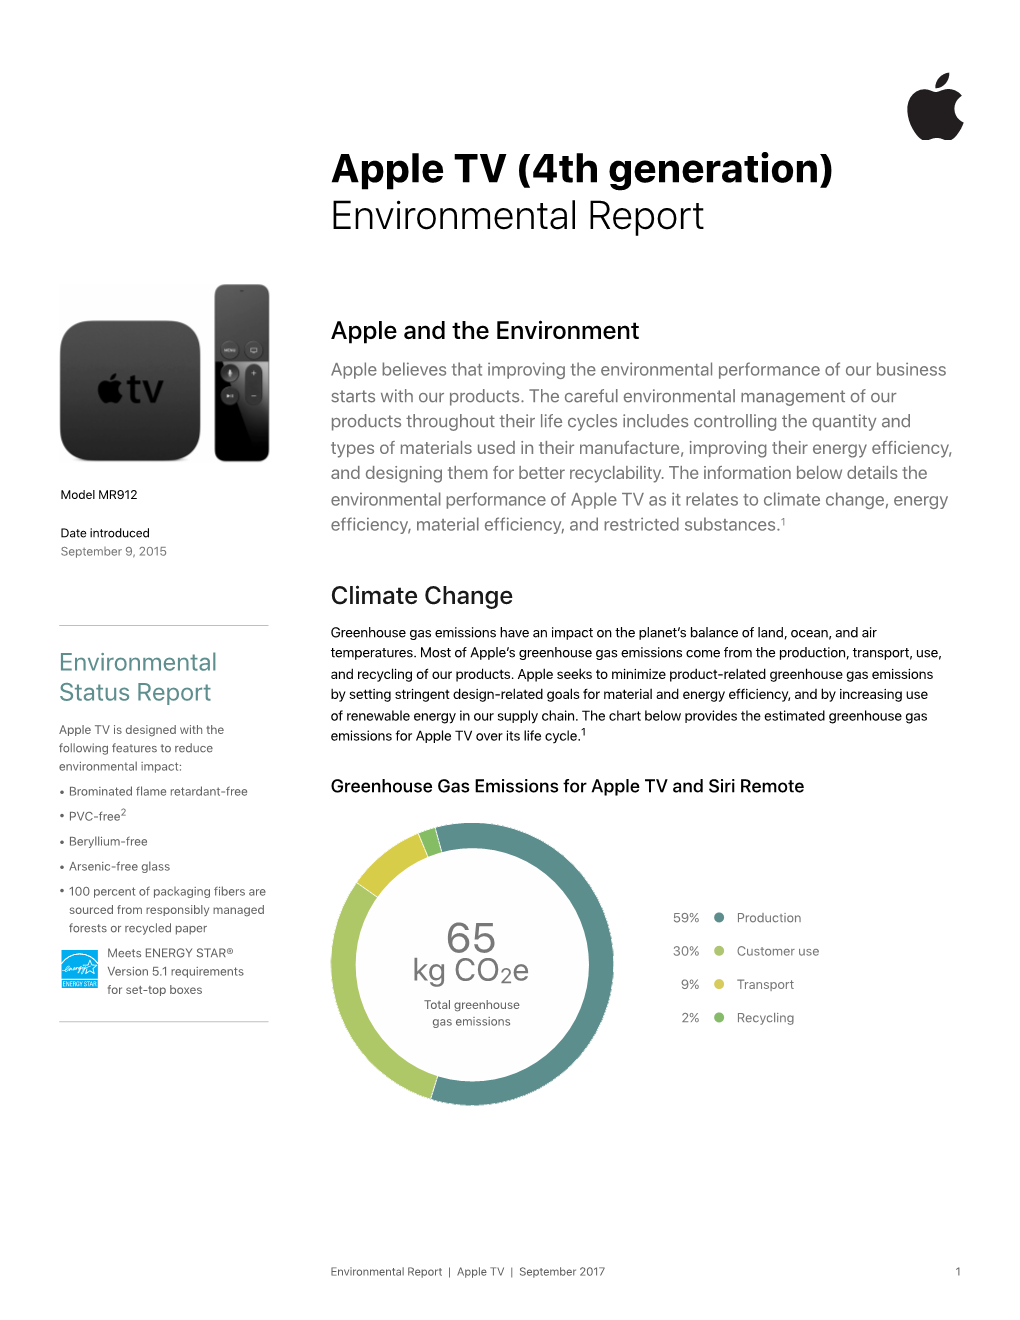 Apple TV (4Th Generation) Environmental Report